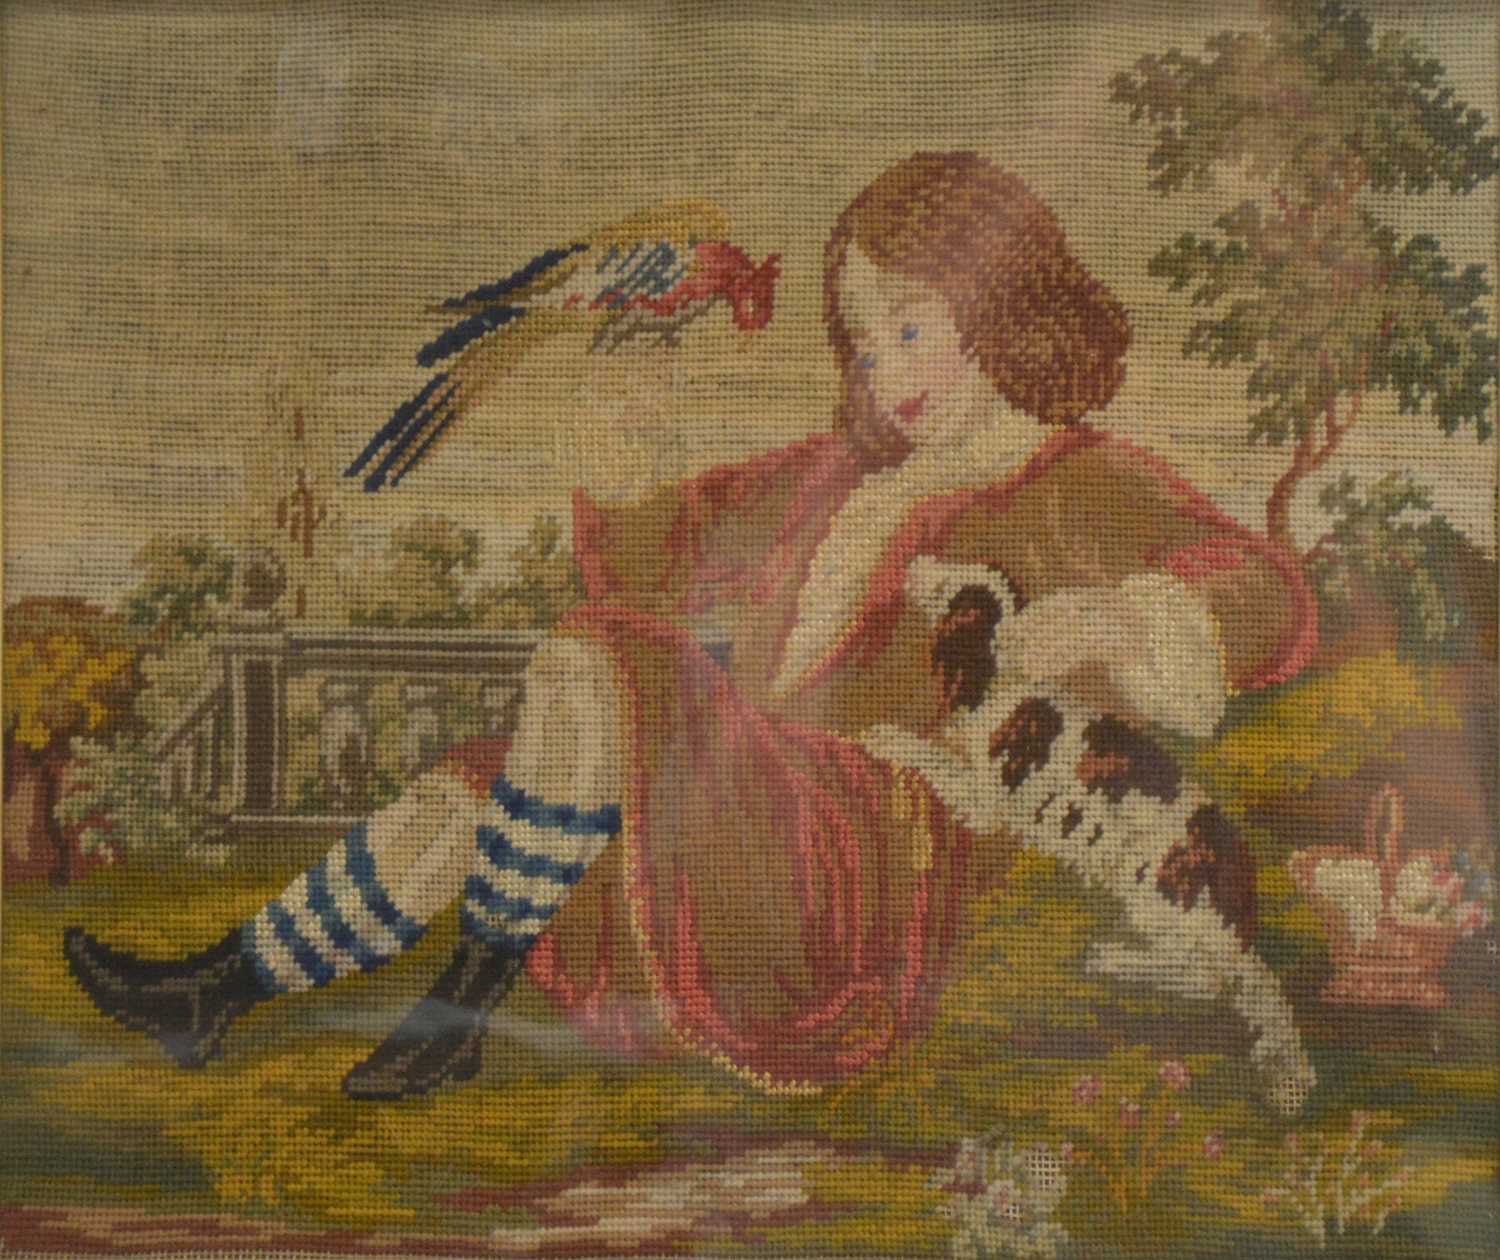 Georgian needlework panel of a boy in a garden with a spaniel and bird